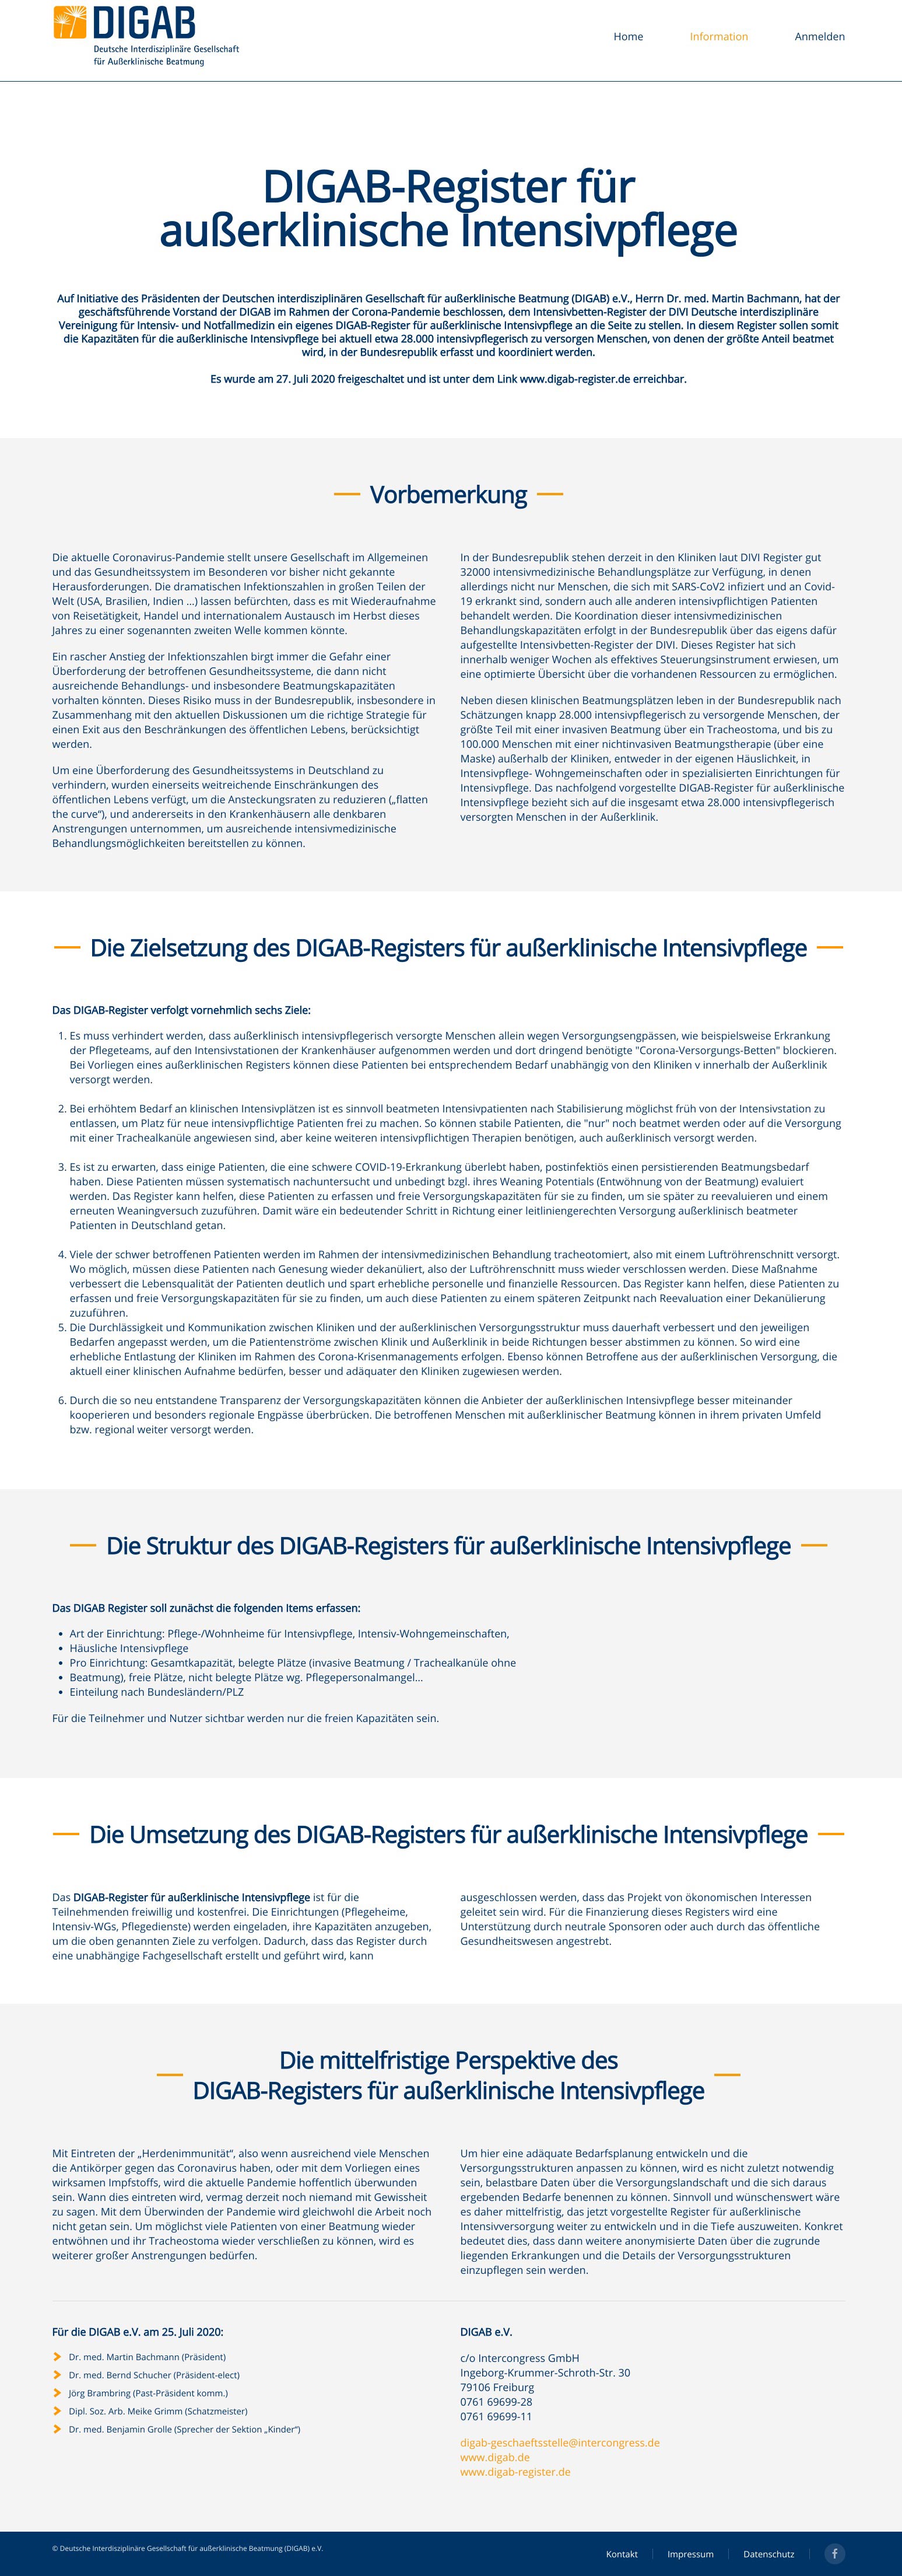 DIGAB Intensivregister Website